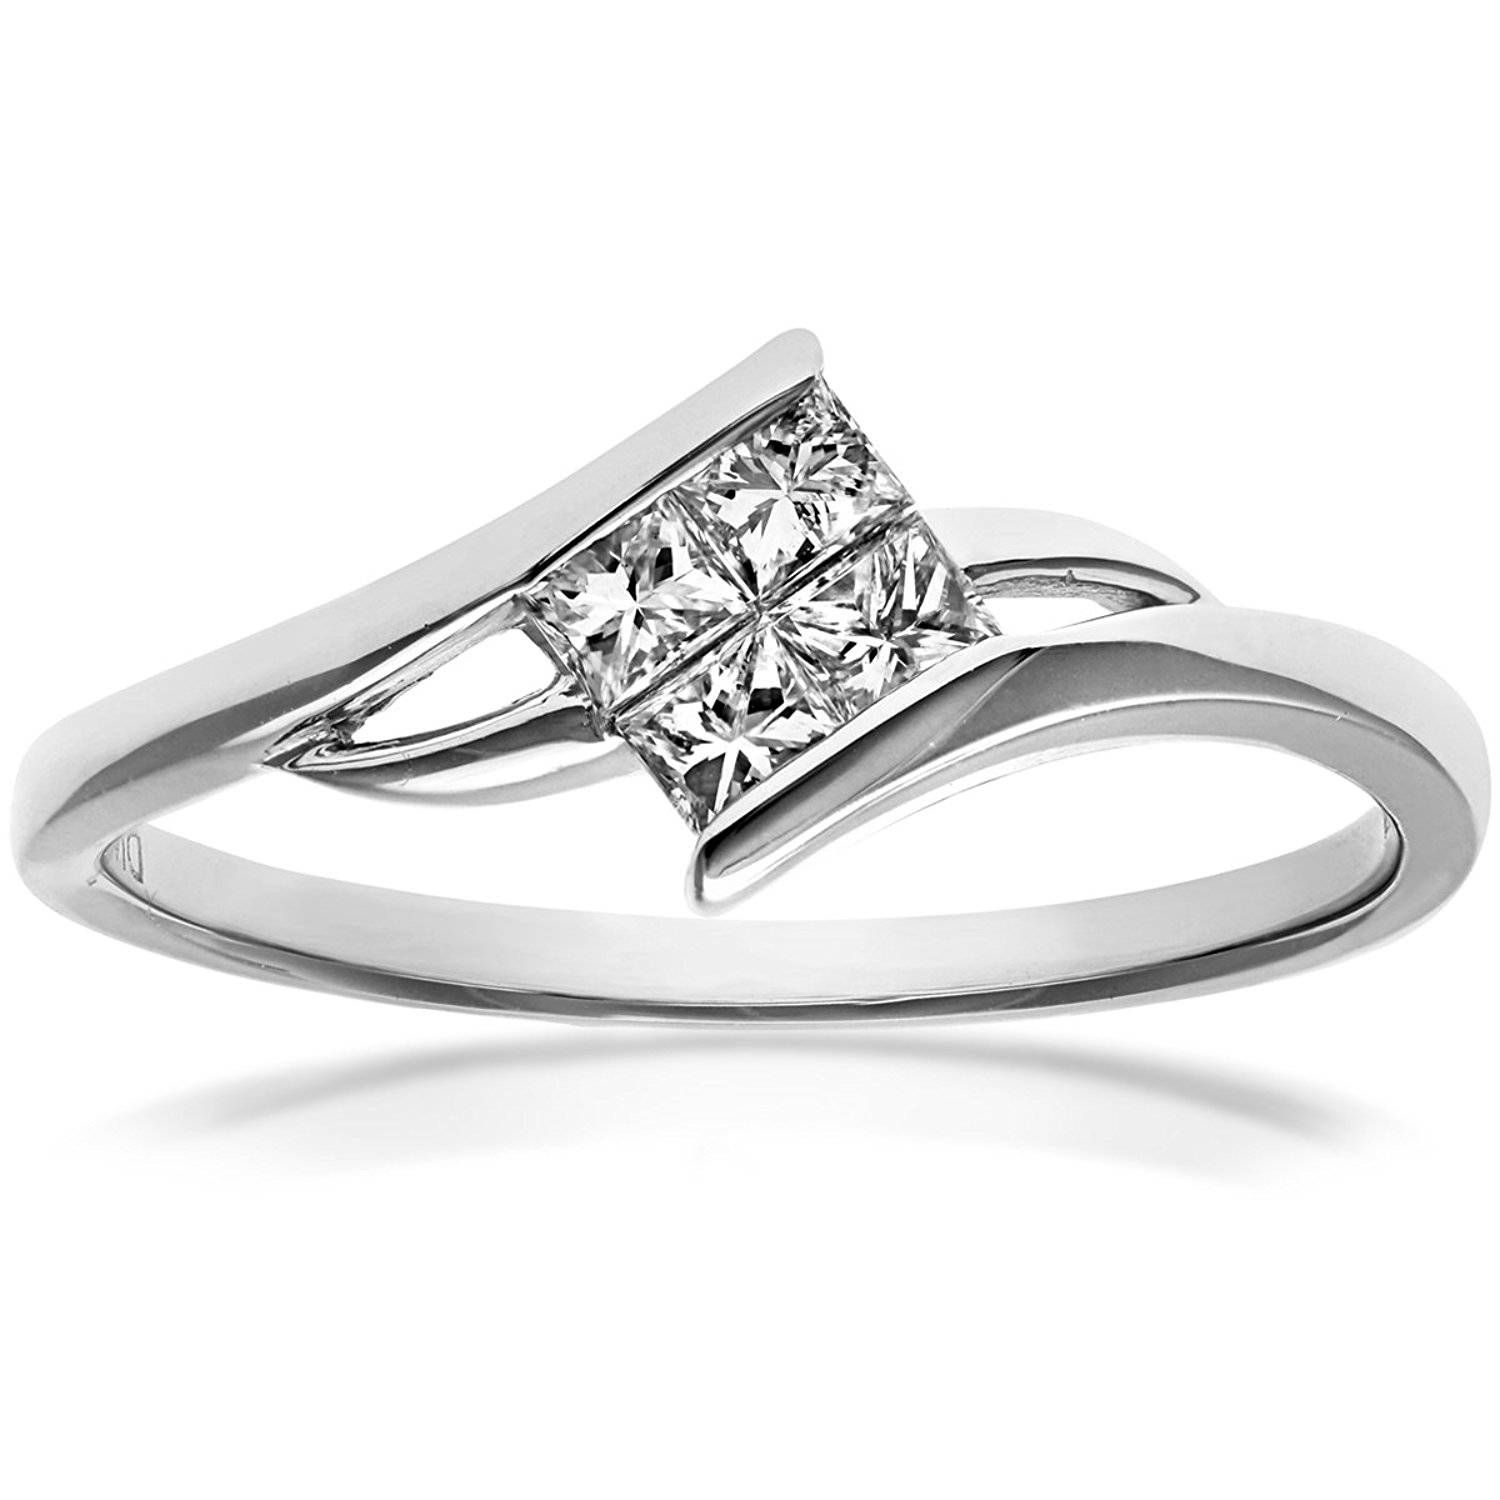 Ring Diamond Wedding Rings Prices Wedding Rings With Diamonds All With Wedding Bands With Diamonds All Around (View 12 of 15)